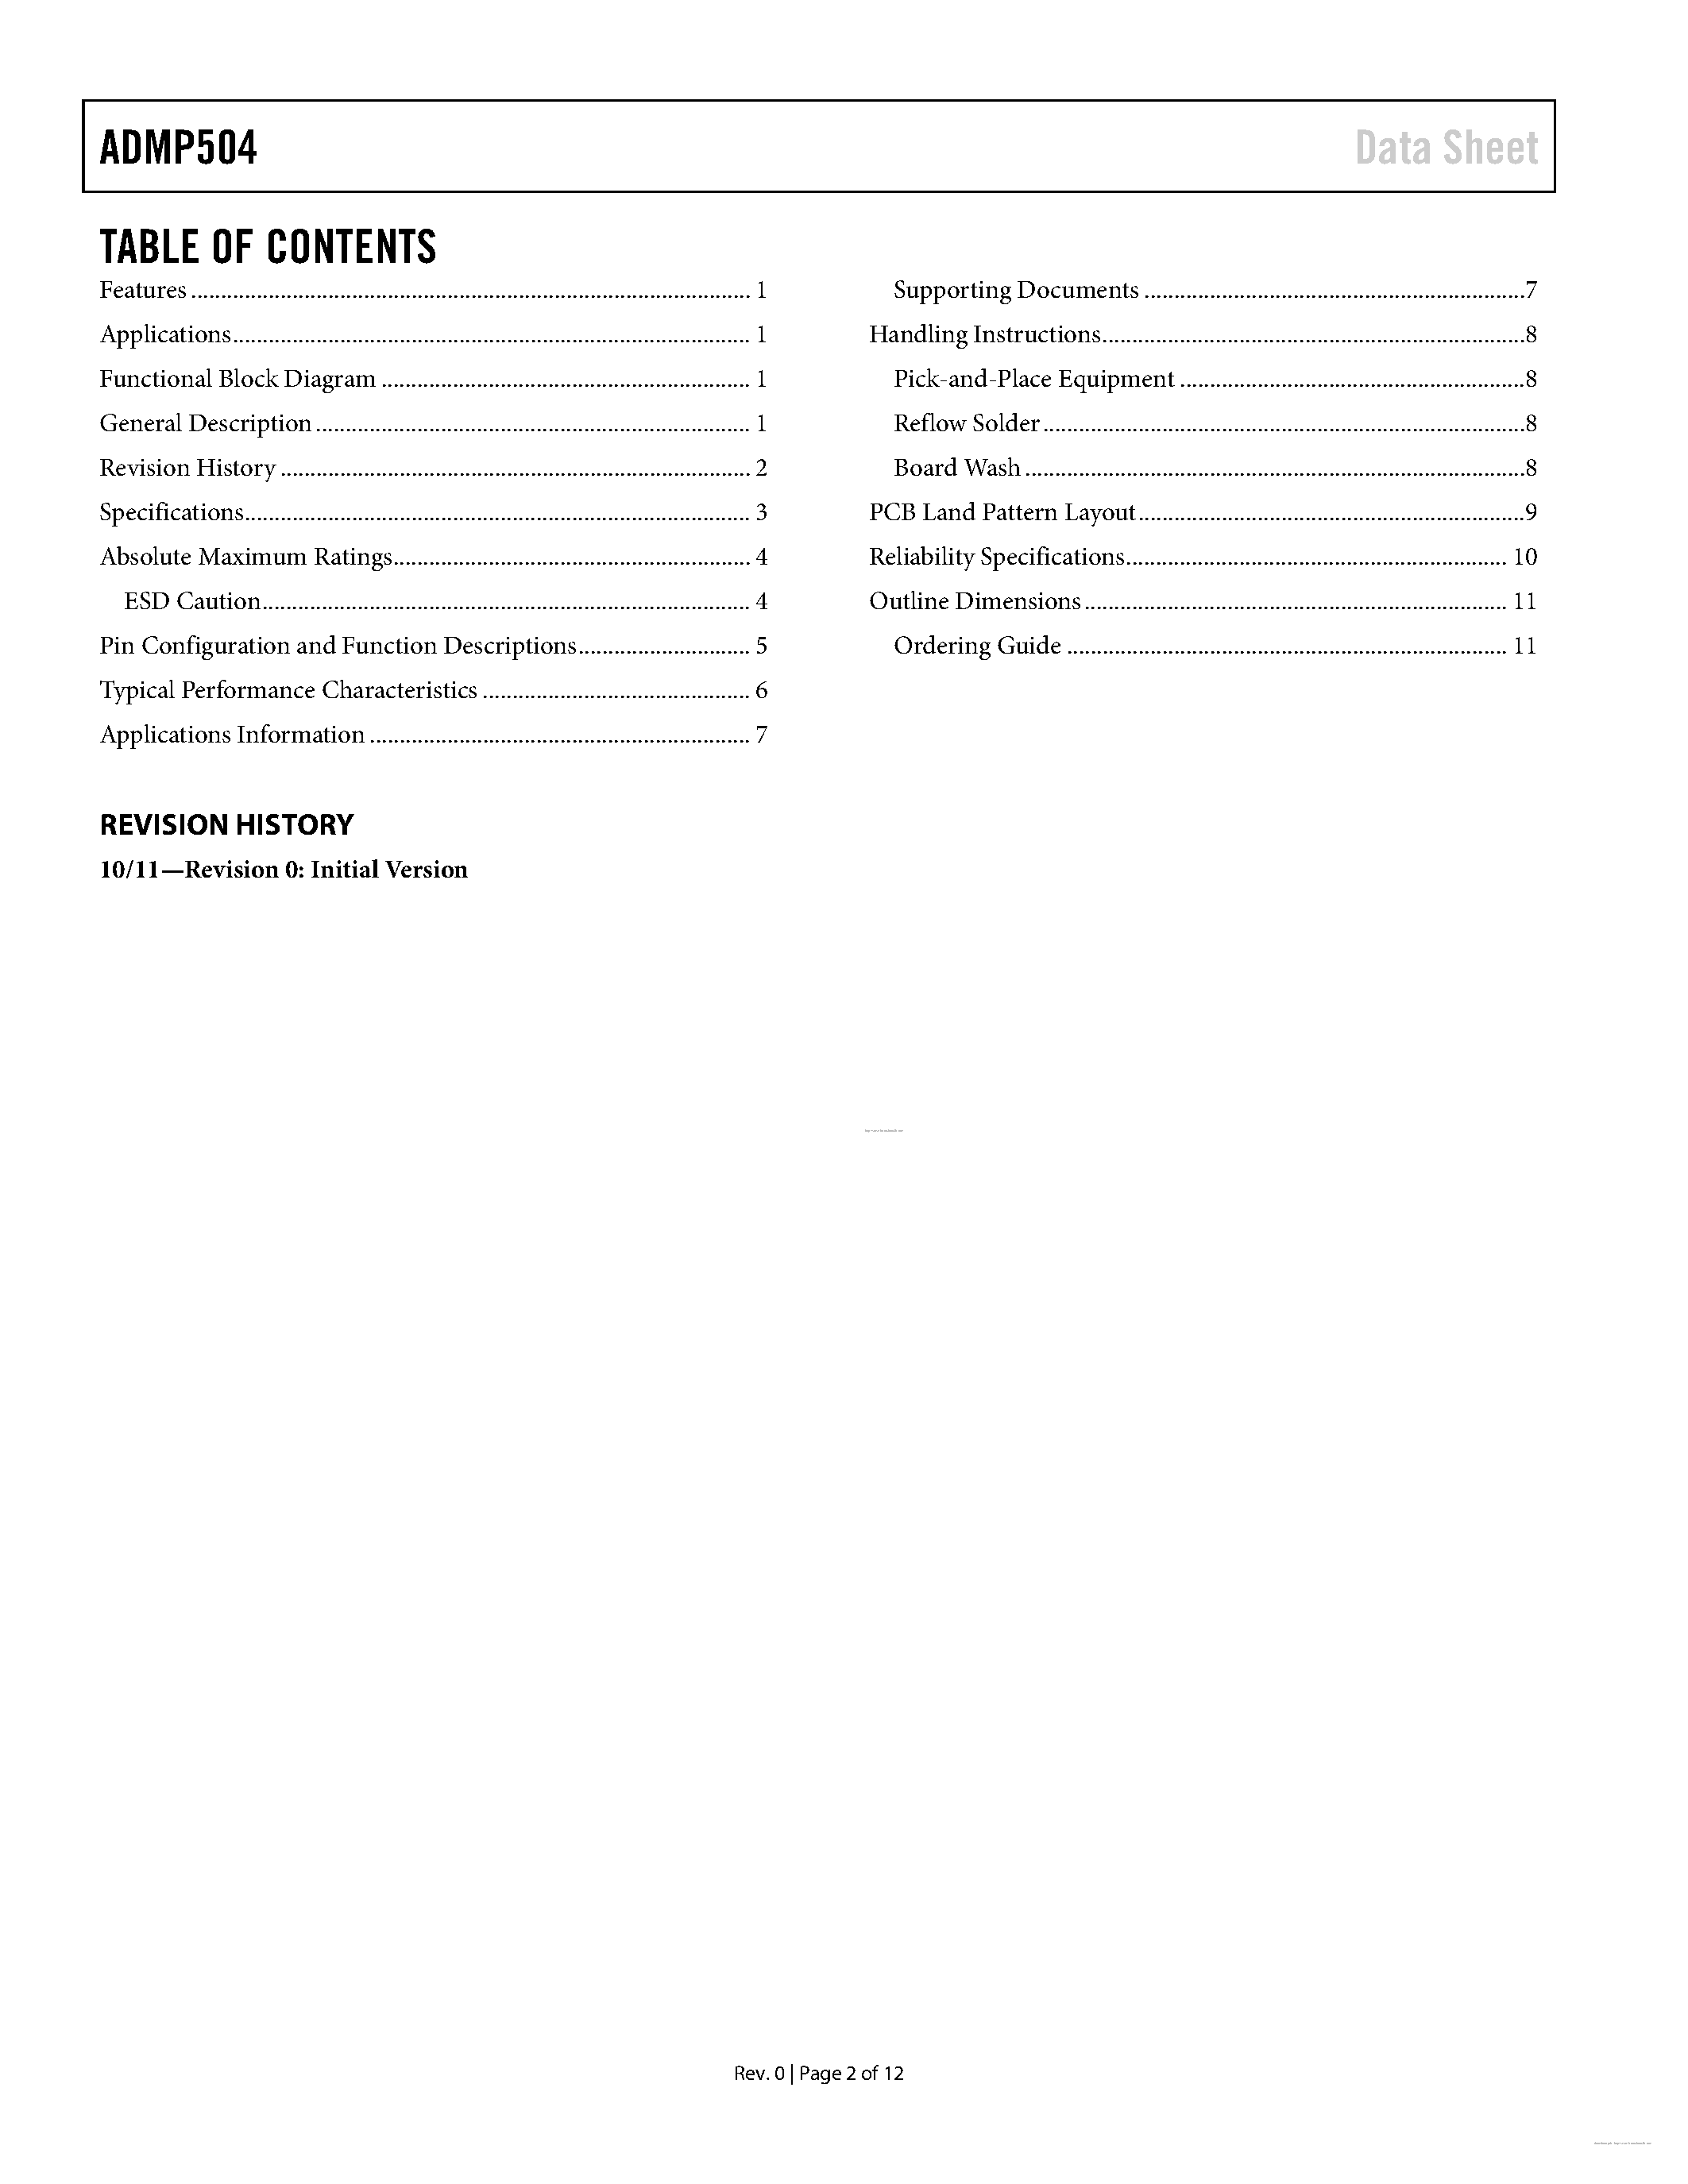 Datasheet ADMP504 - page 2